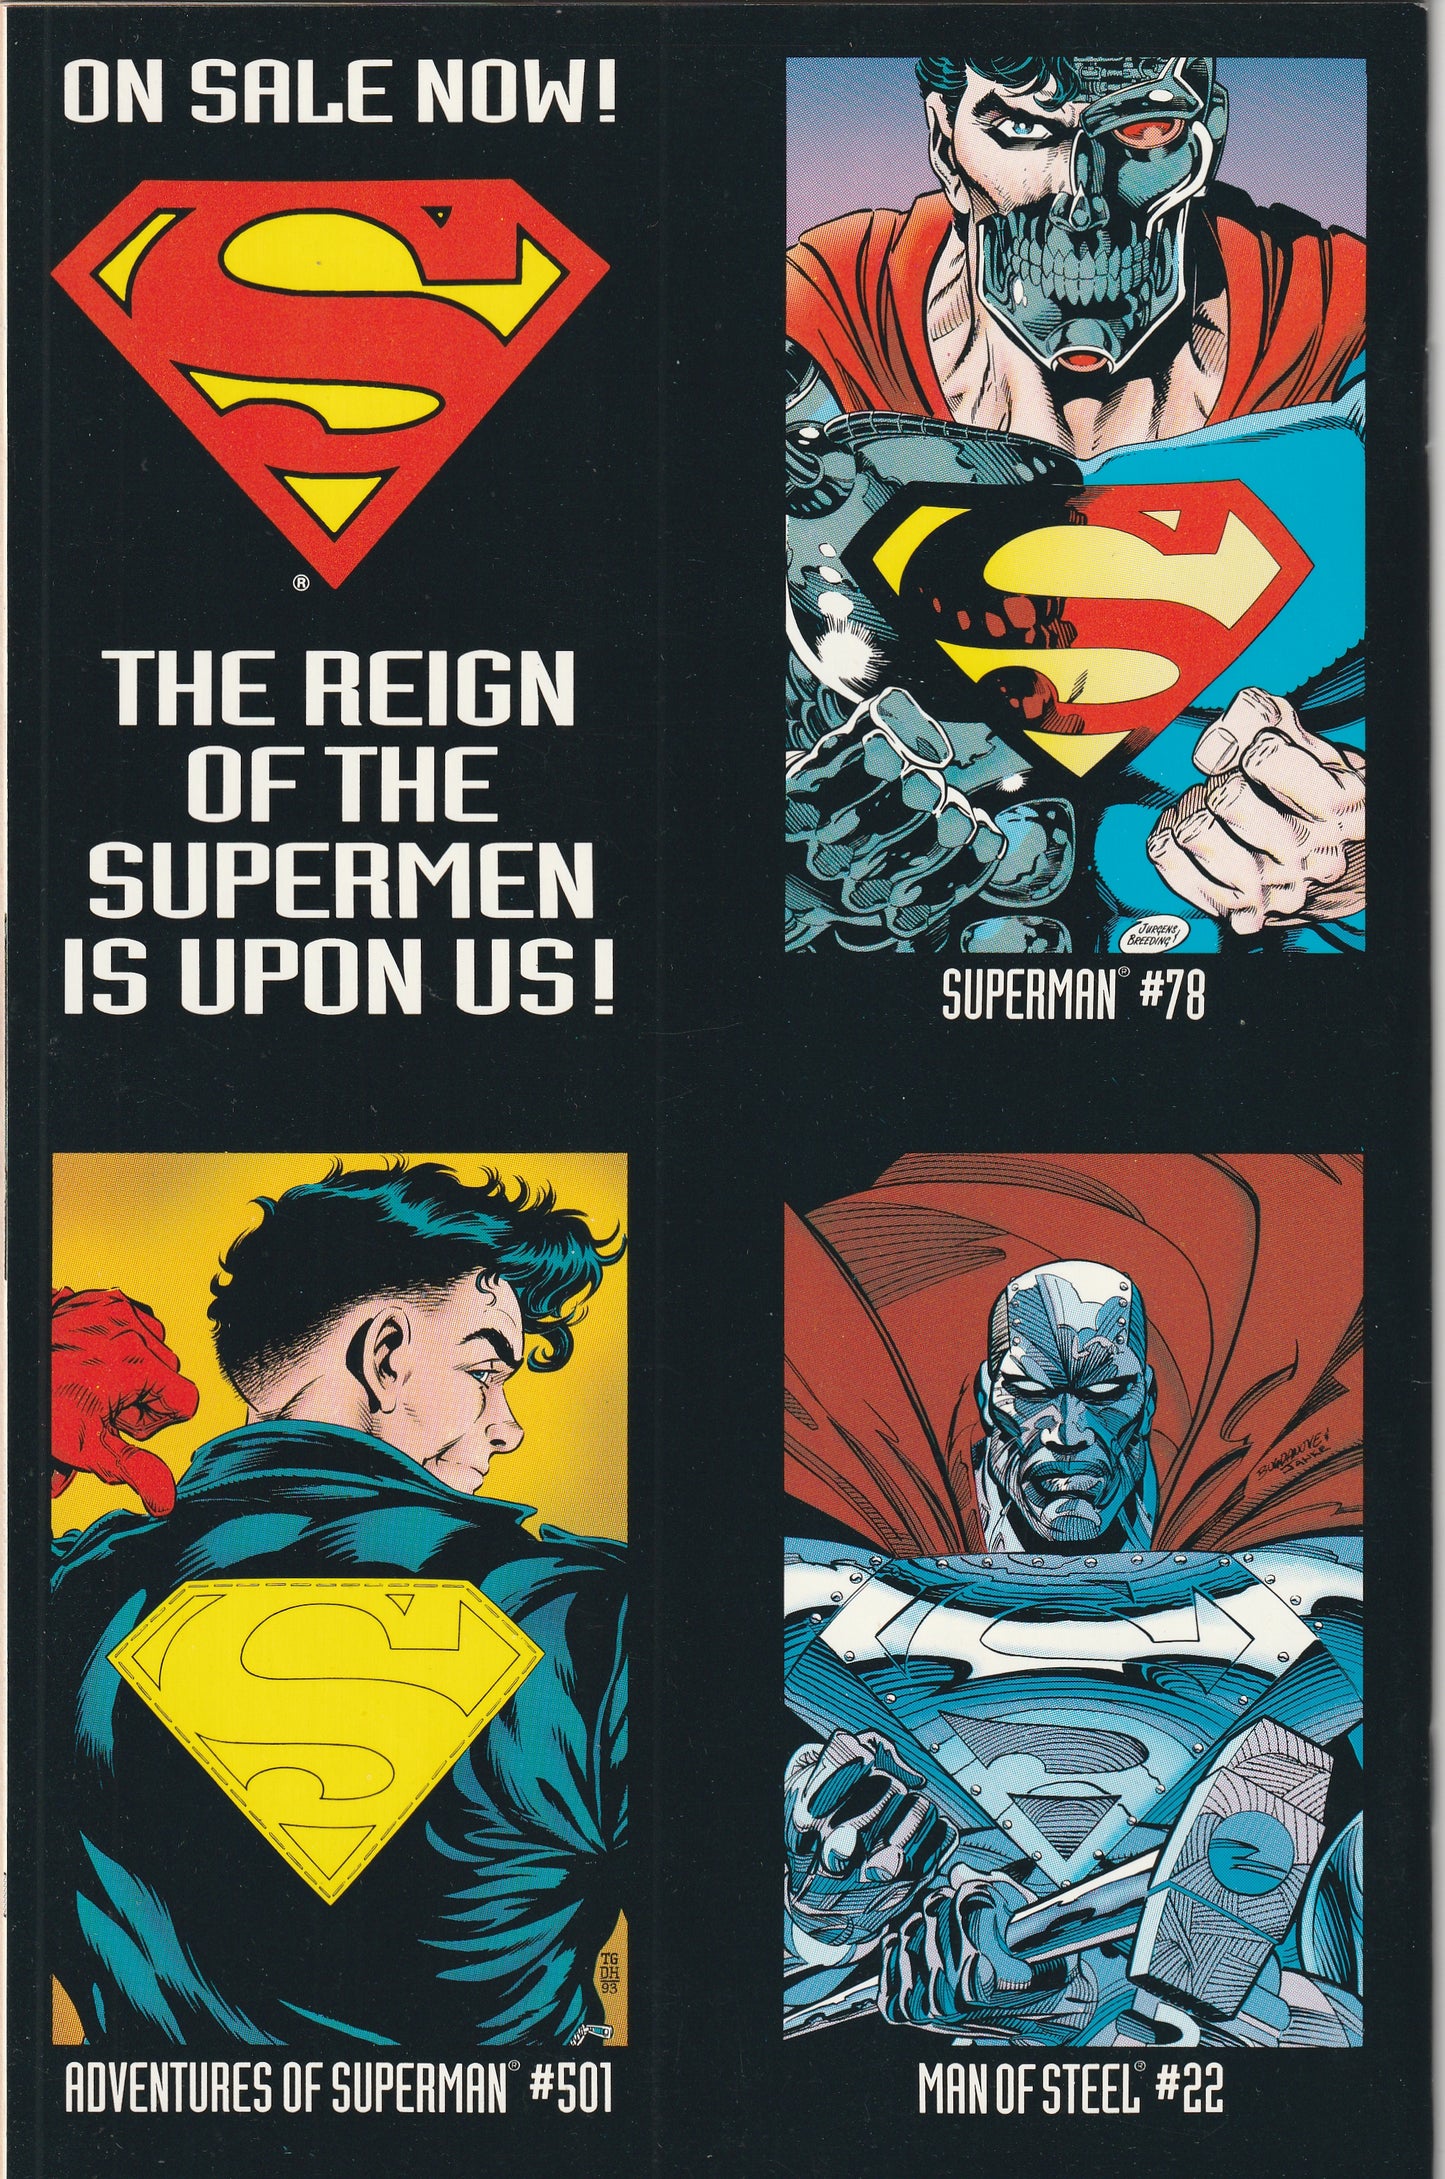 Action Comics #687 (1993) - Reign of the Supermen Deluxe Die-Cut Edition